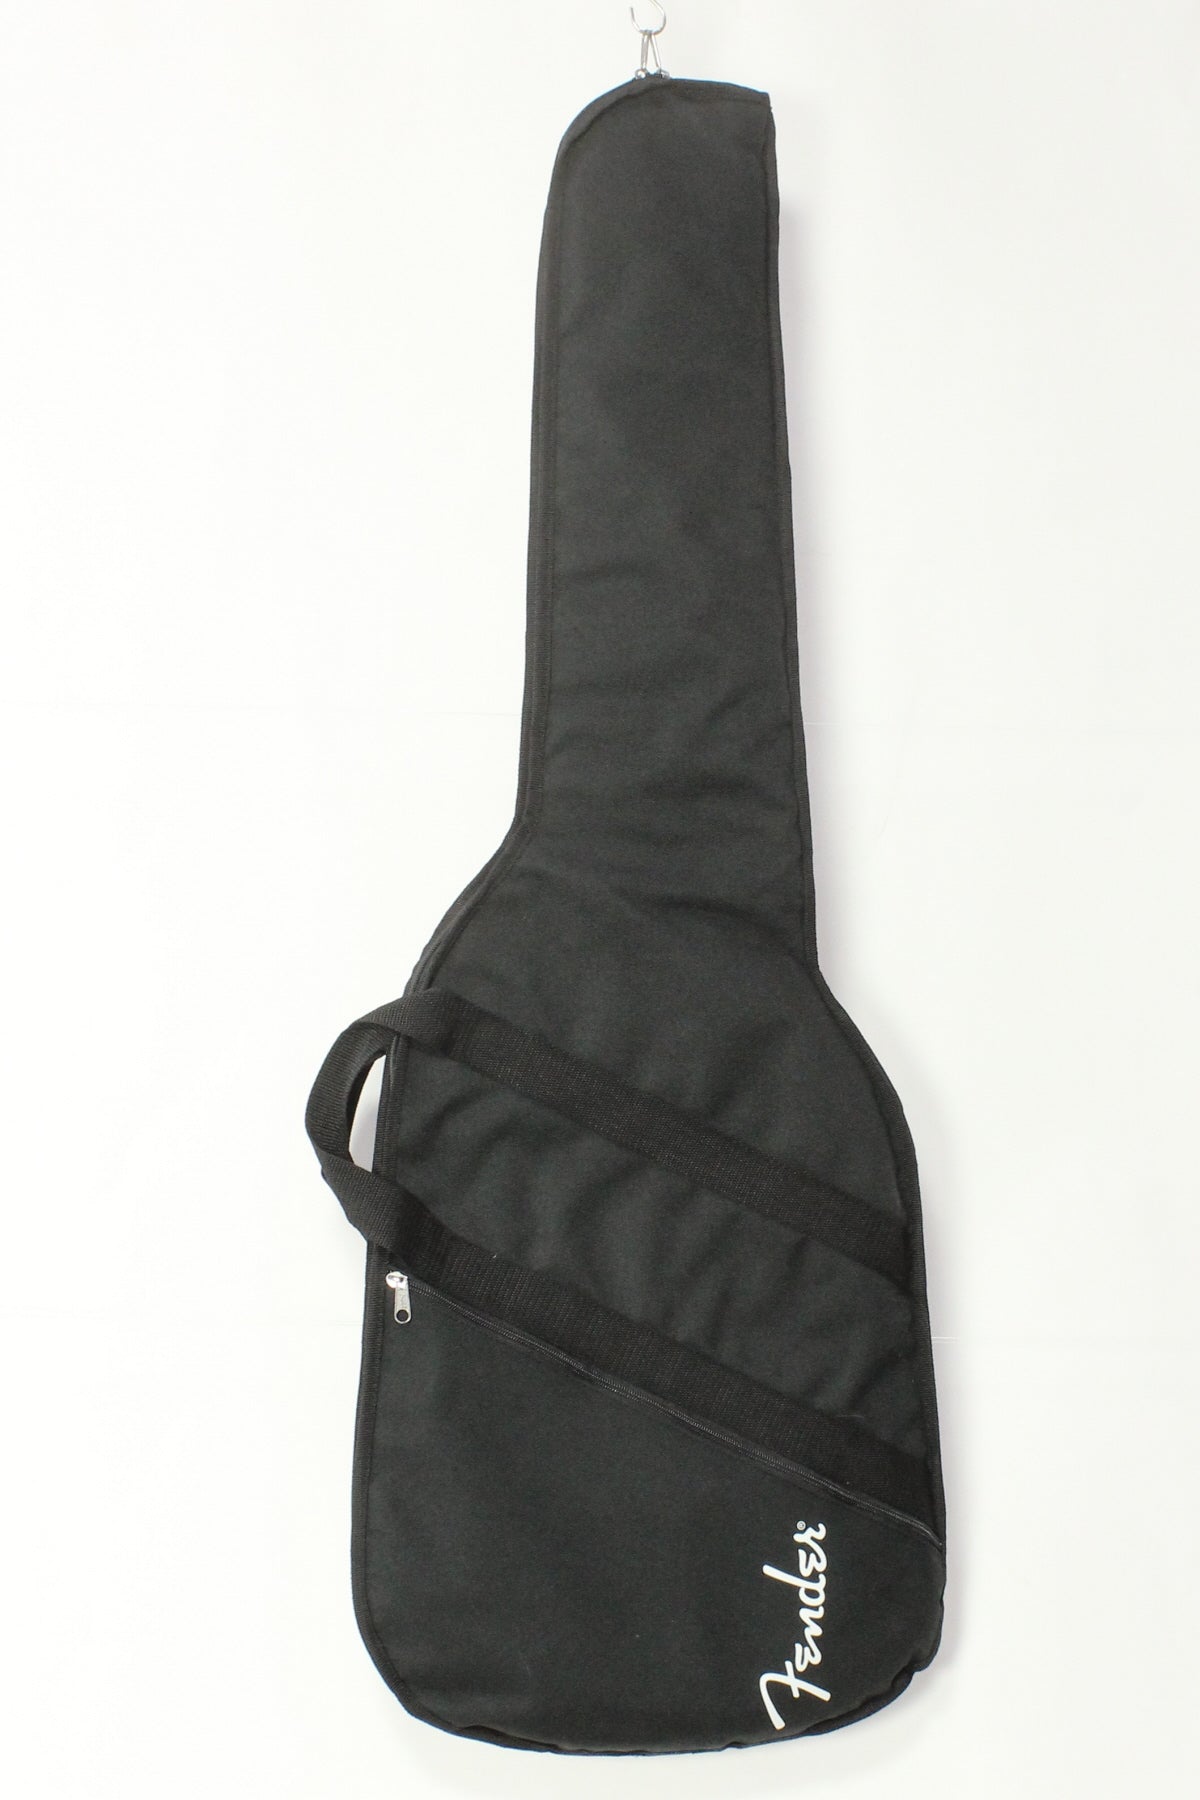 [SN JD22003769] USED Fender / Made in Japan Junior Collection Jazzmaster Black Maple Fingerboard [09]